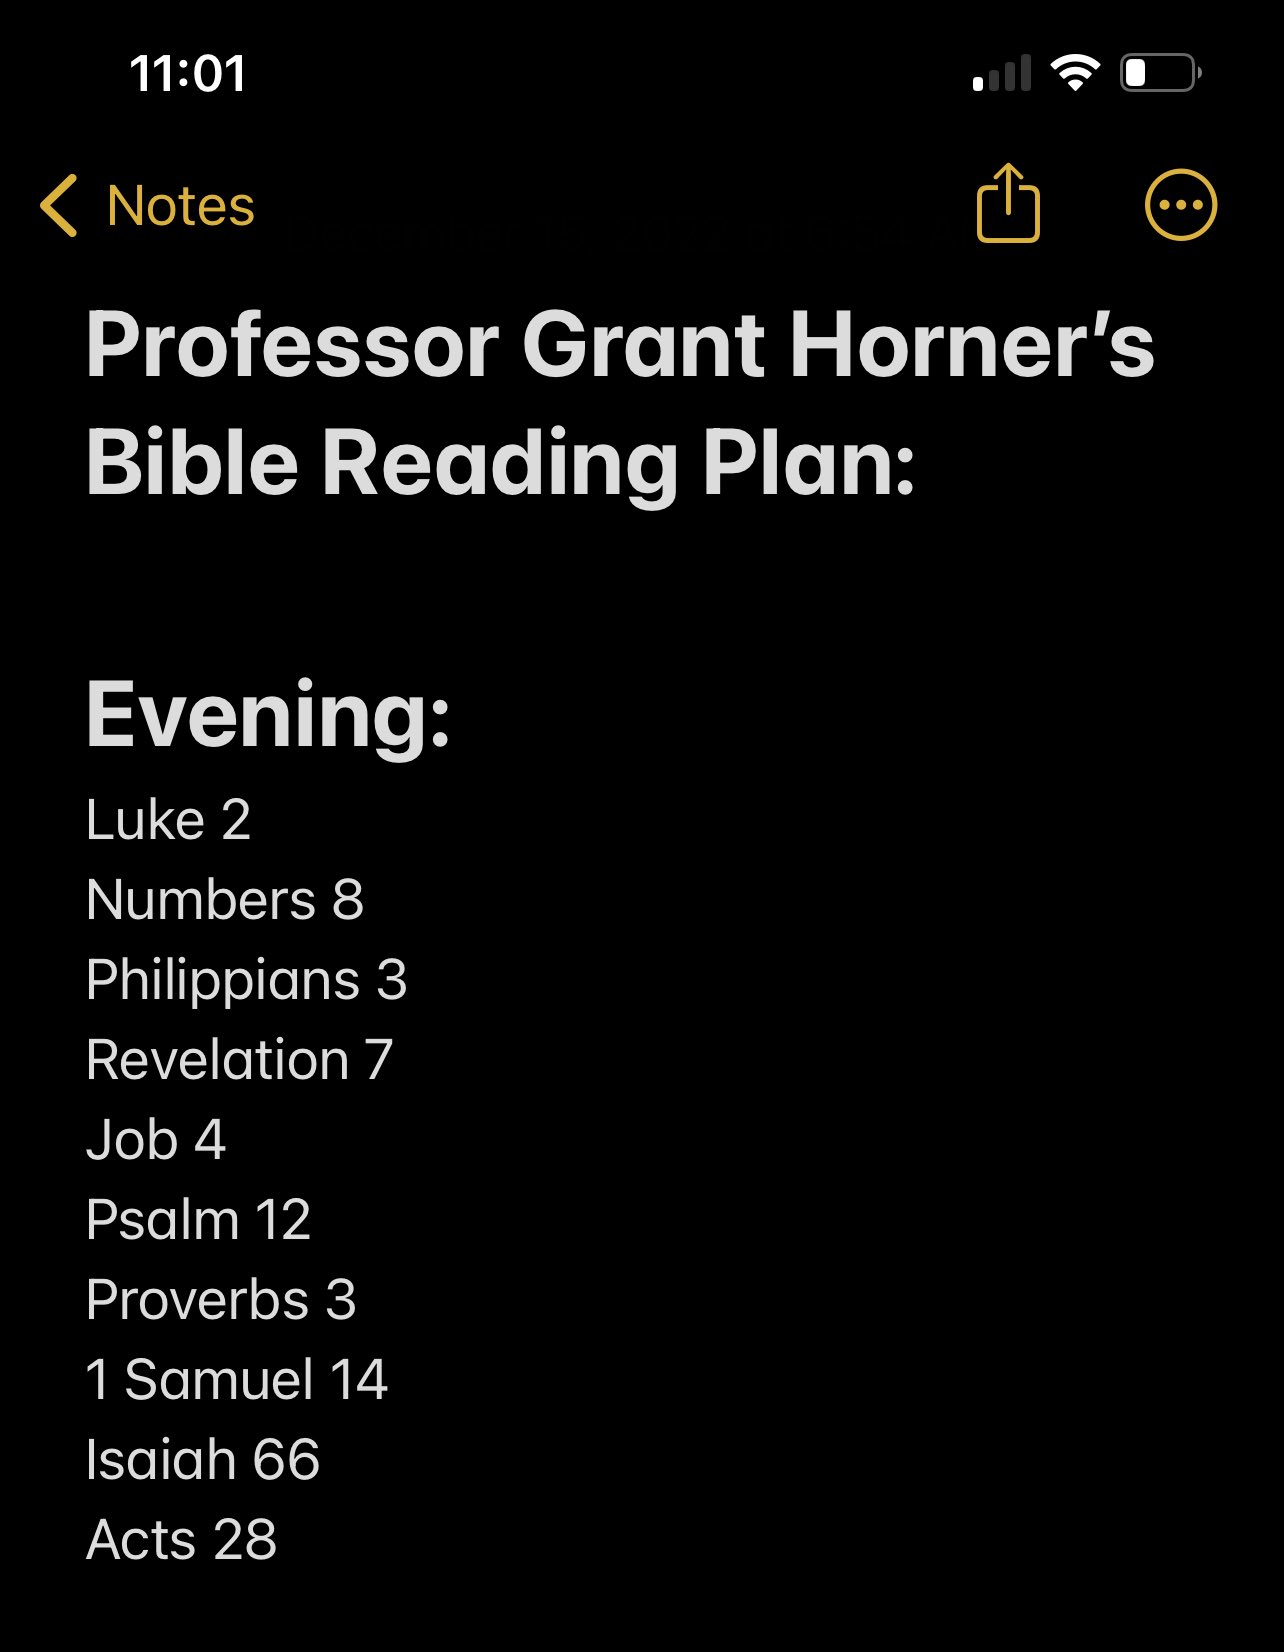 11:01 Notes Professor Grant Horner's Bible Reading Plan: Evening: Luke 2 Numbers 8 Philippians 3 Revelation 7 Job 4 Psalm 12 Proverbs 3 1 Samuel 14 Isaiah 66 Acts 28